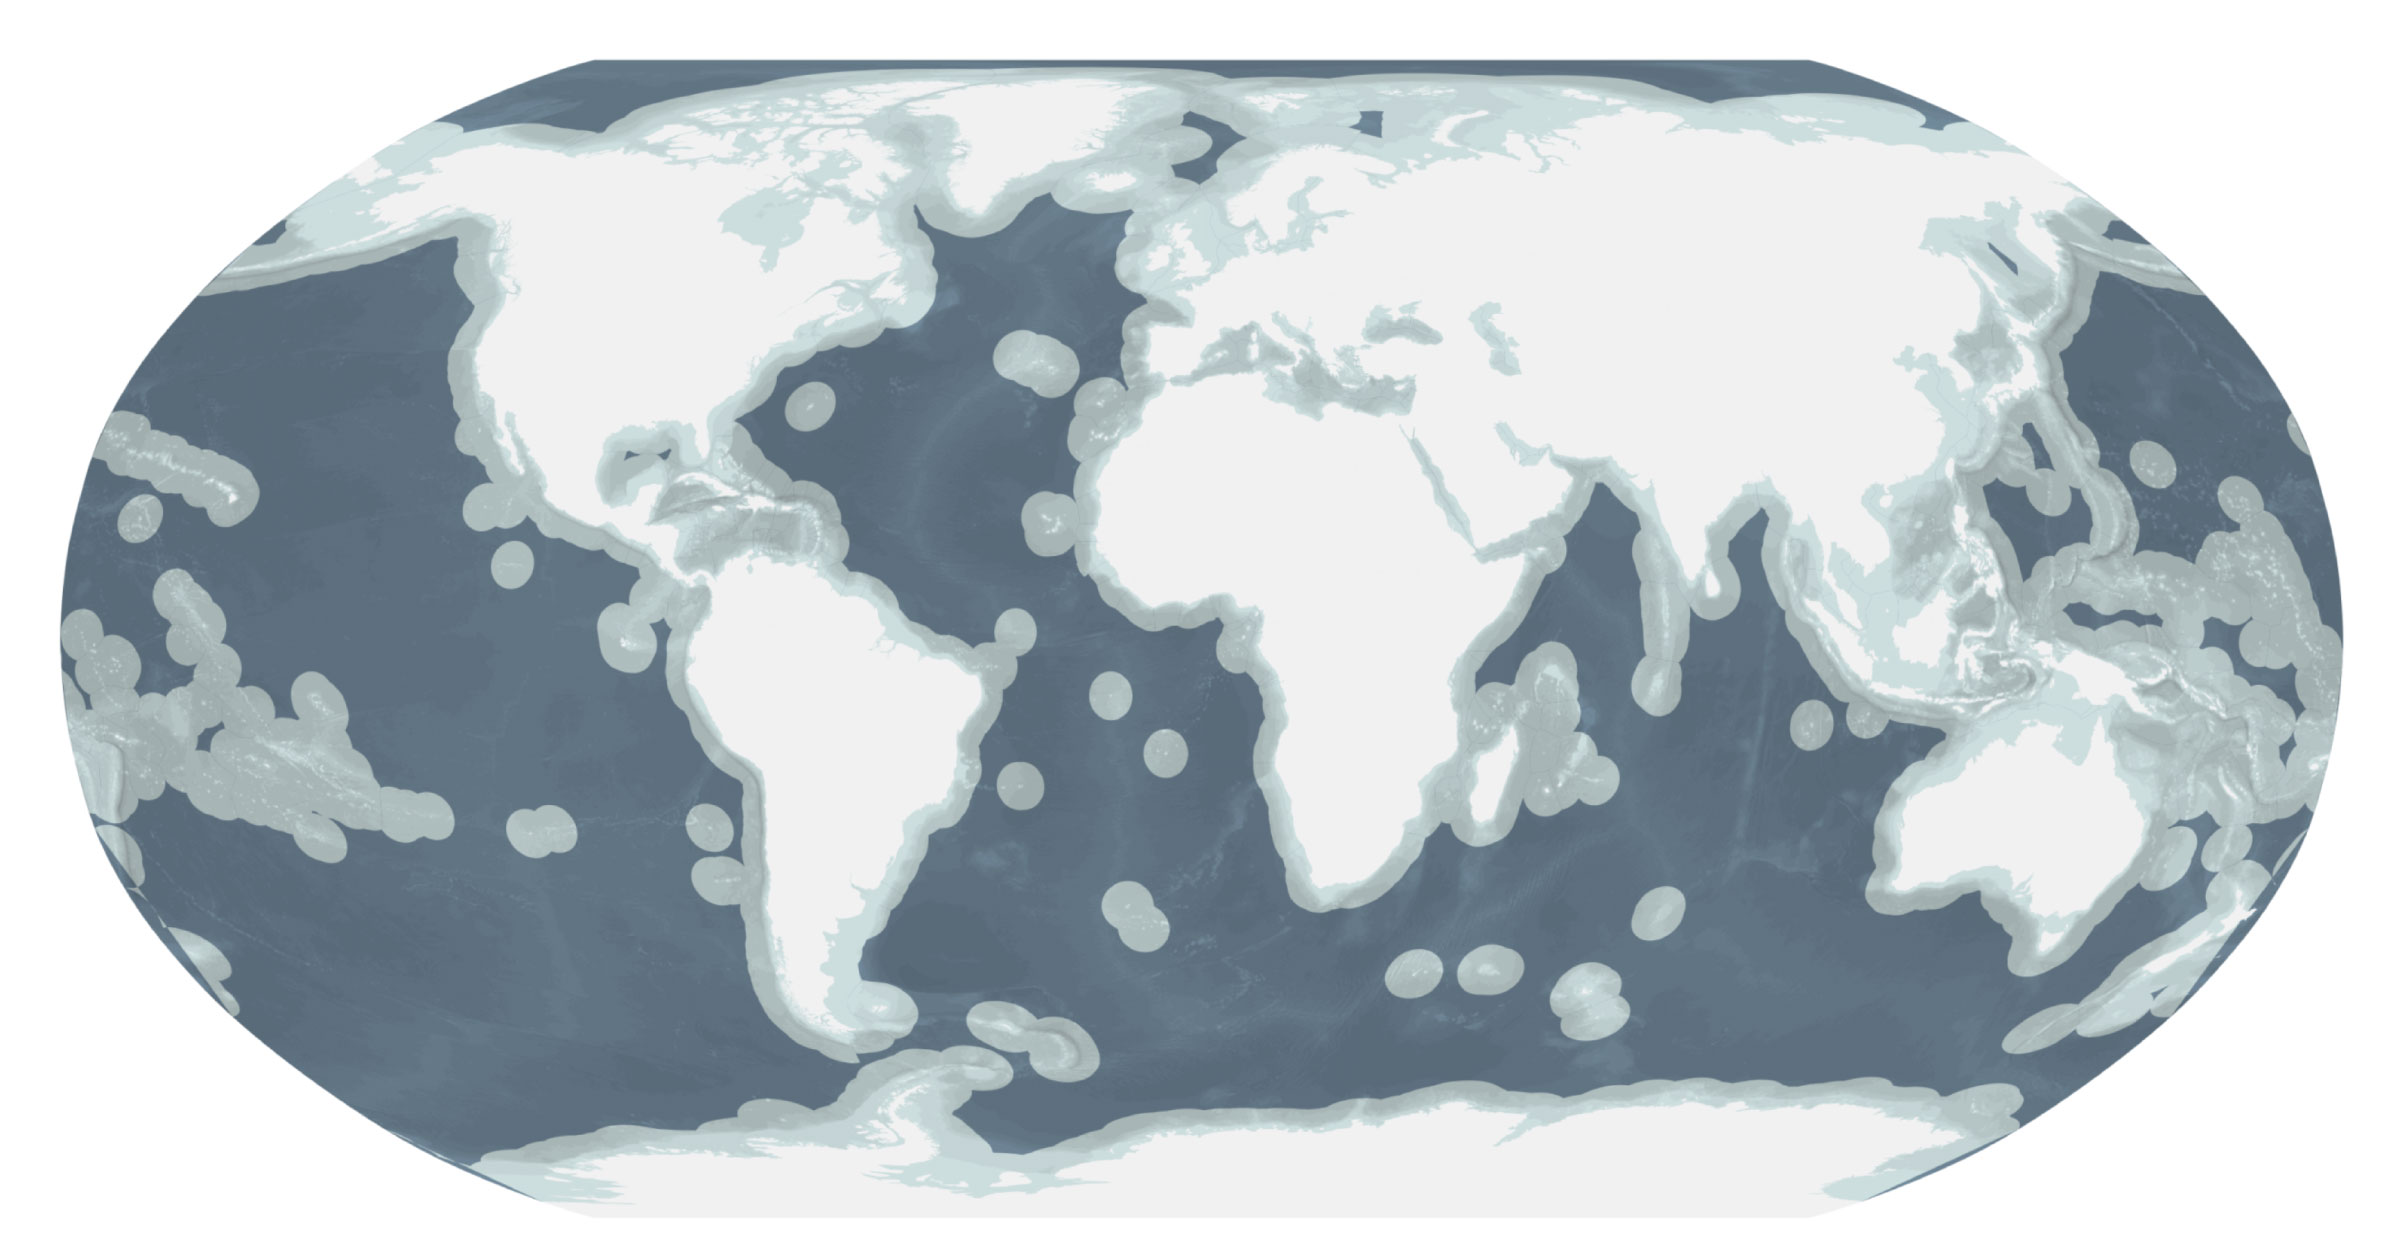 An explainer on the High Seas Treaty that aims to preserve Marine life globally.